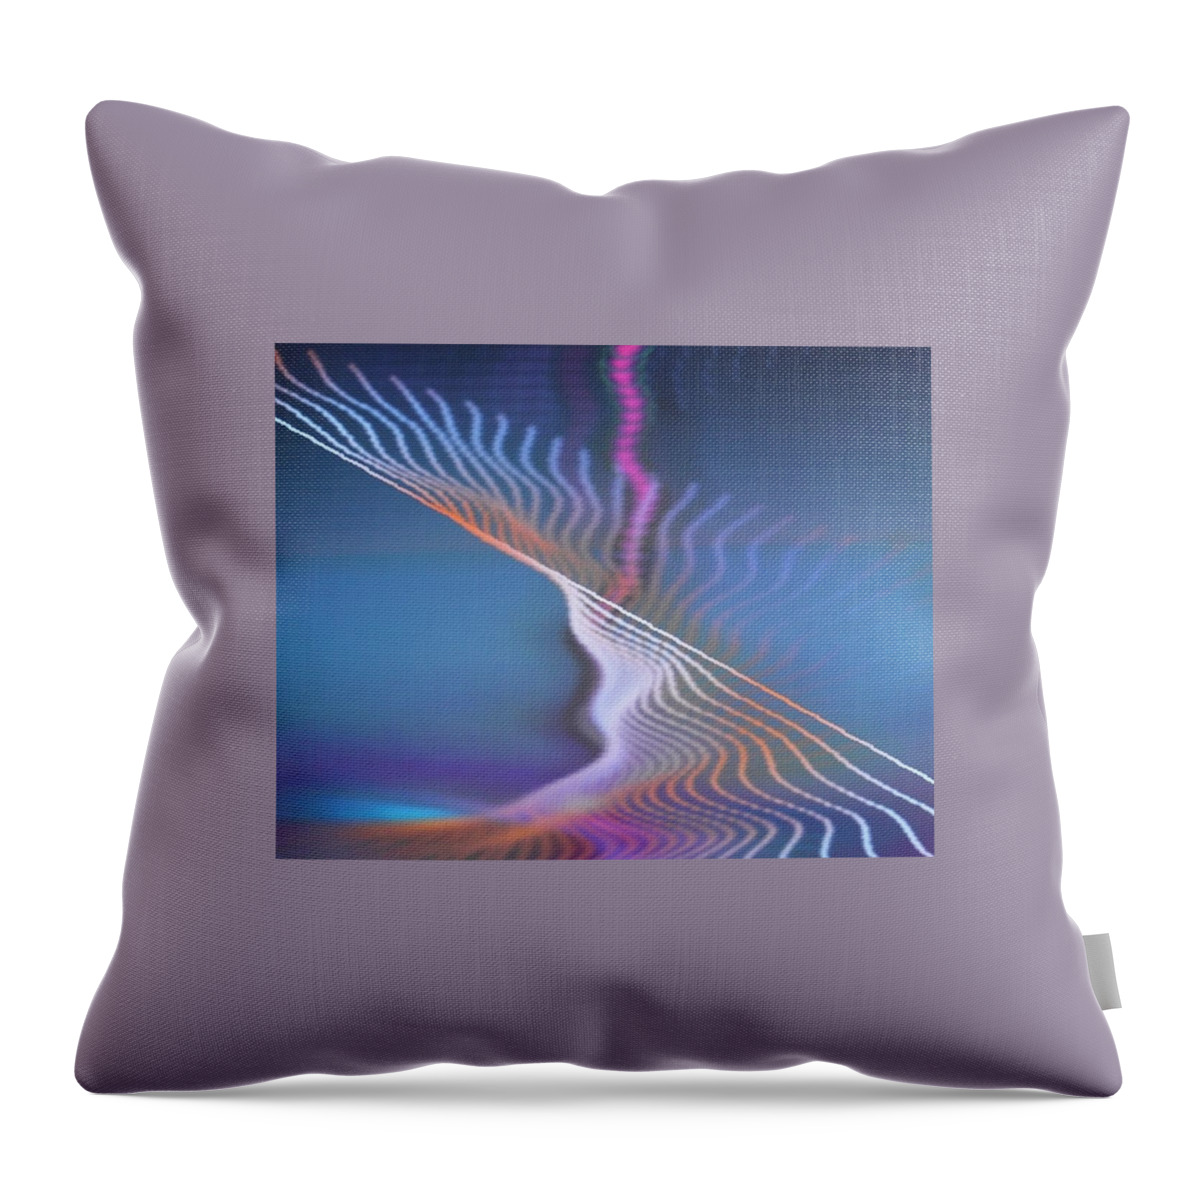 Digital Art Throw Pillow featuring the digital art Img0117 by Ralph Root